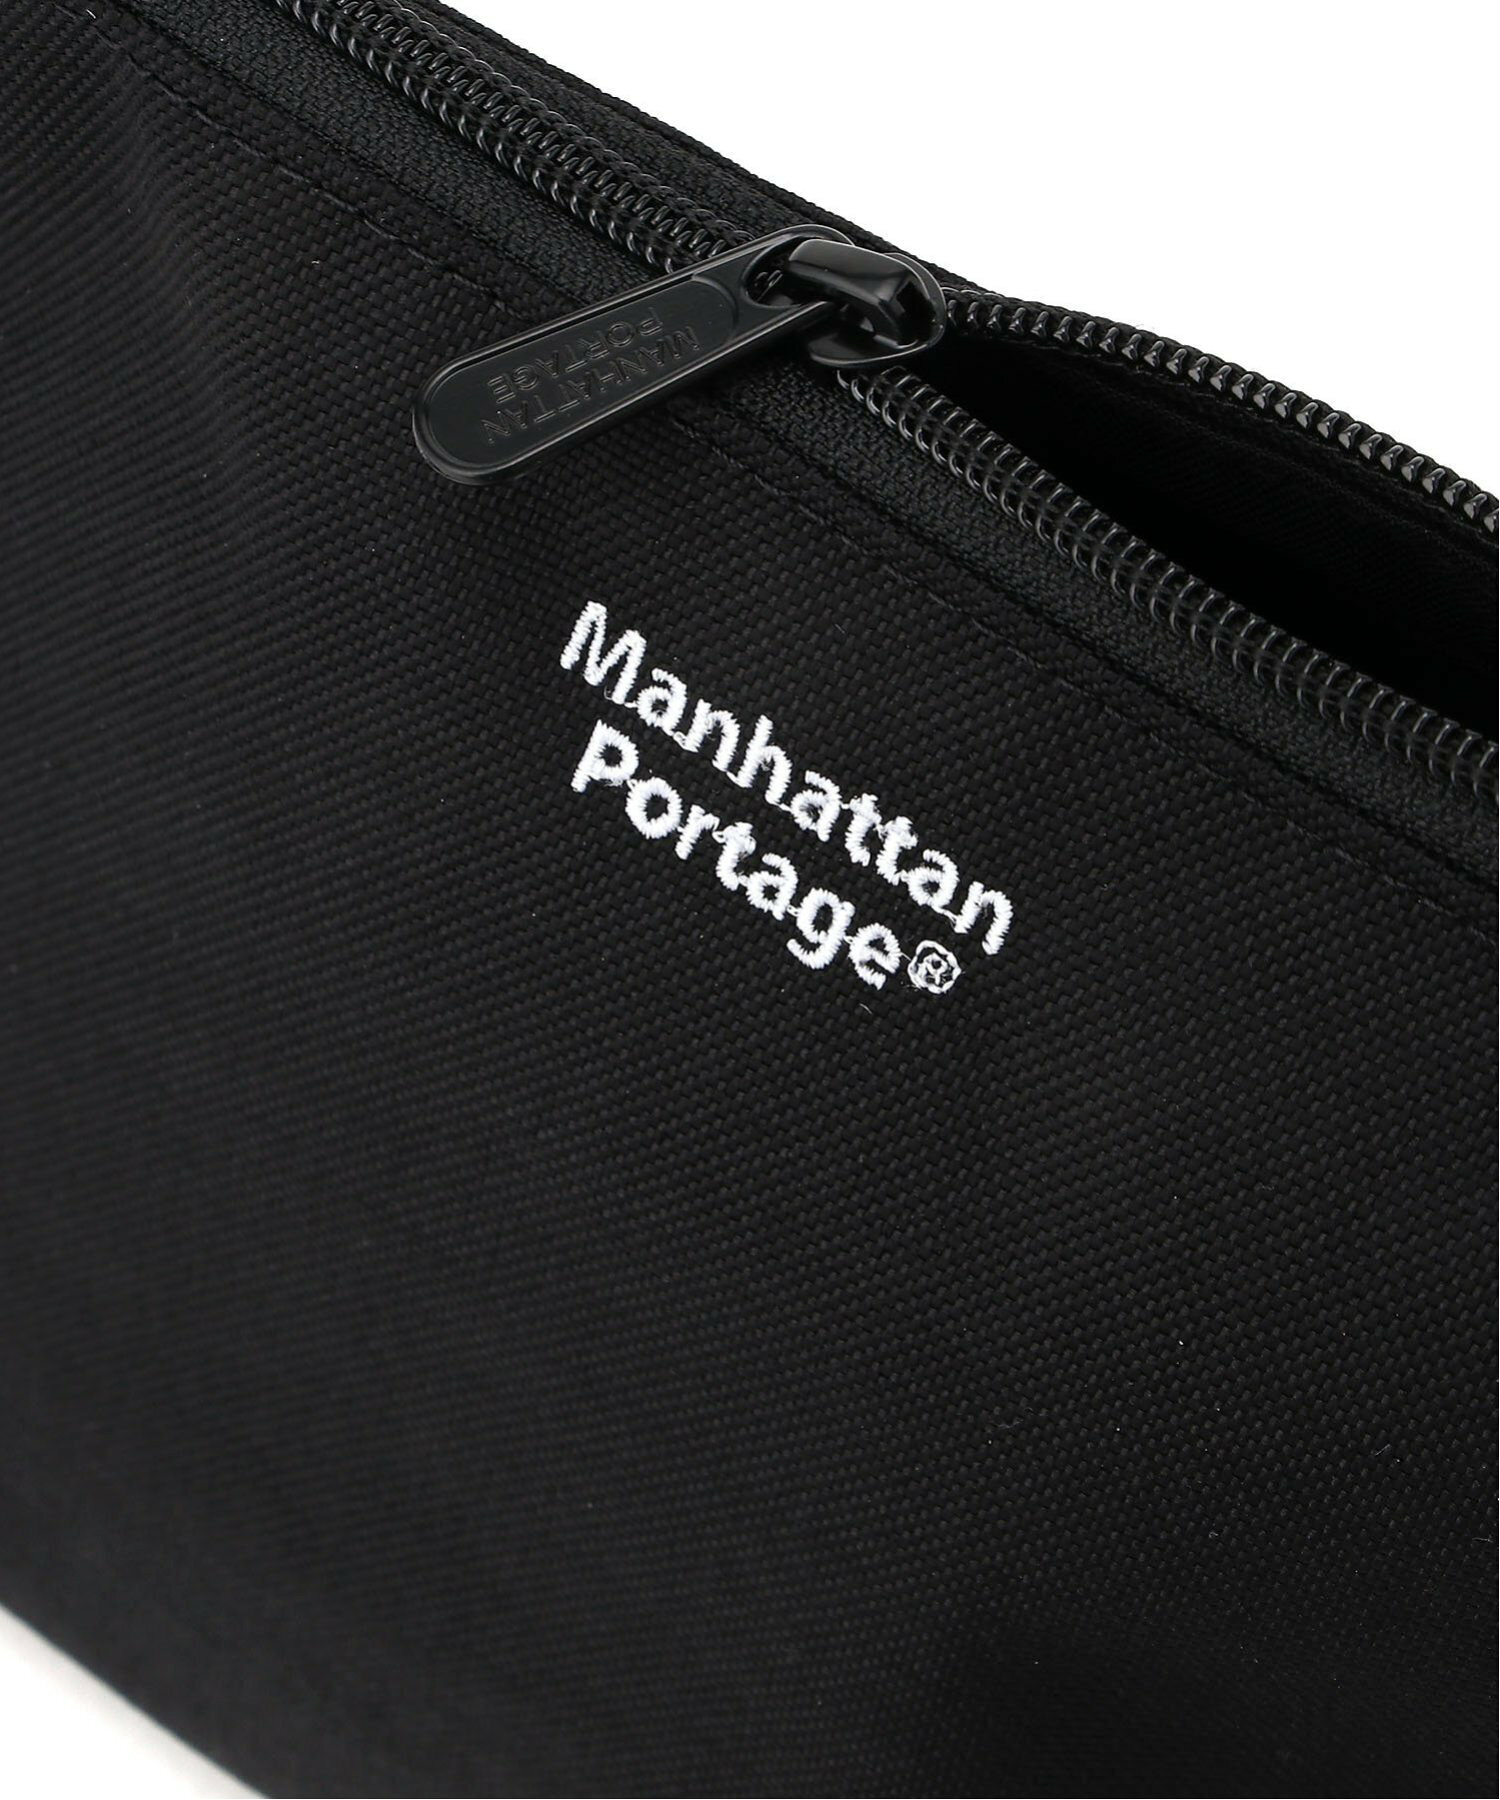 Cobble Hill Nylon Messenger Bag (XS) No Flap